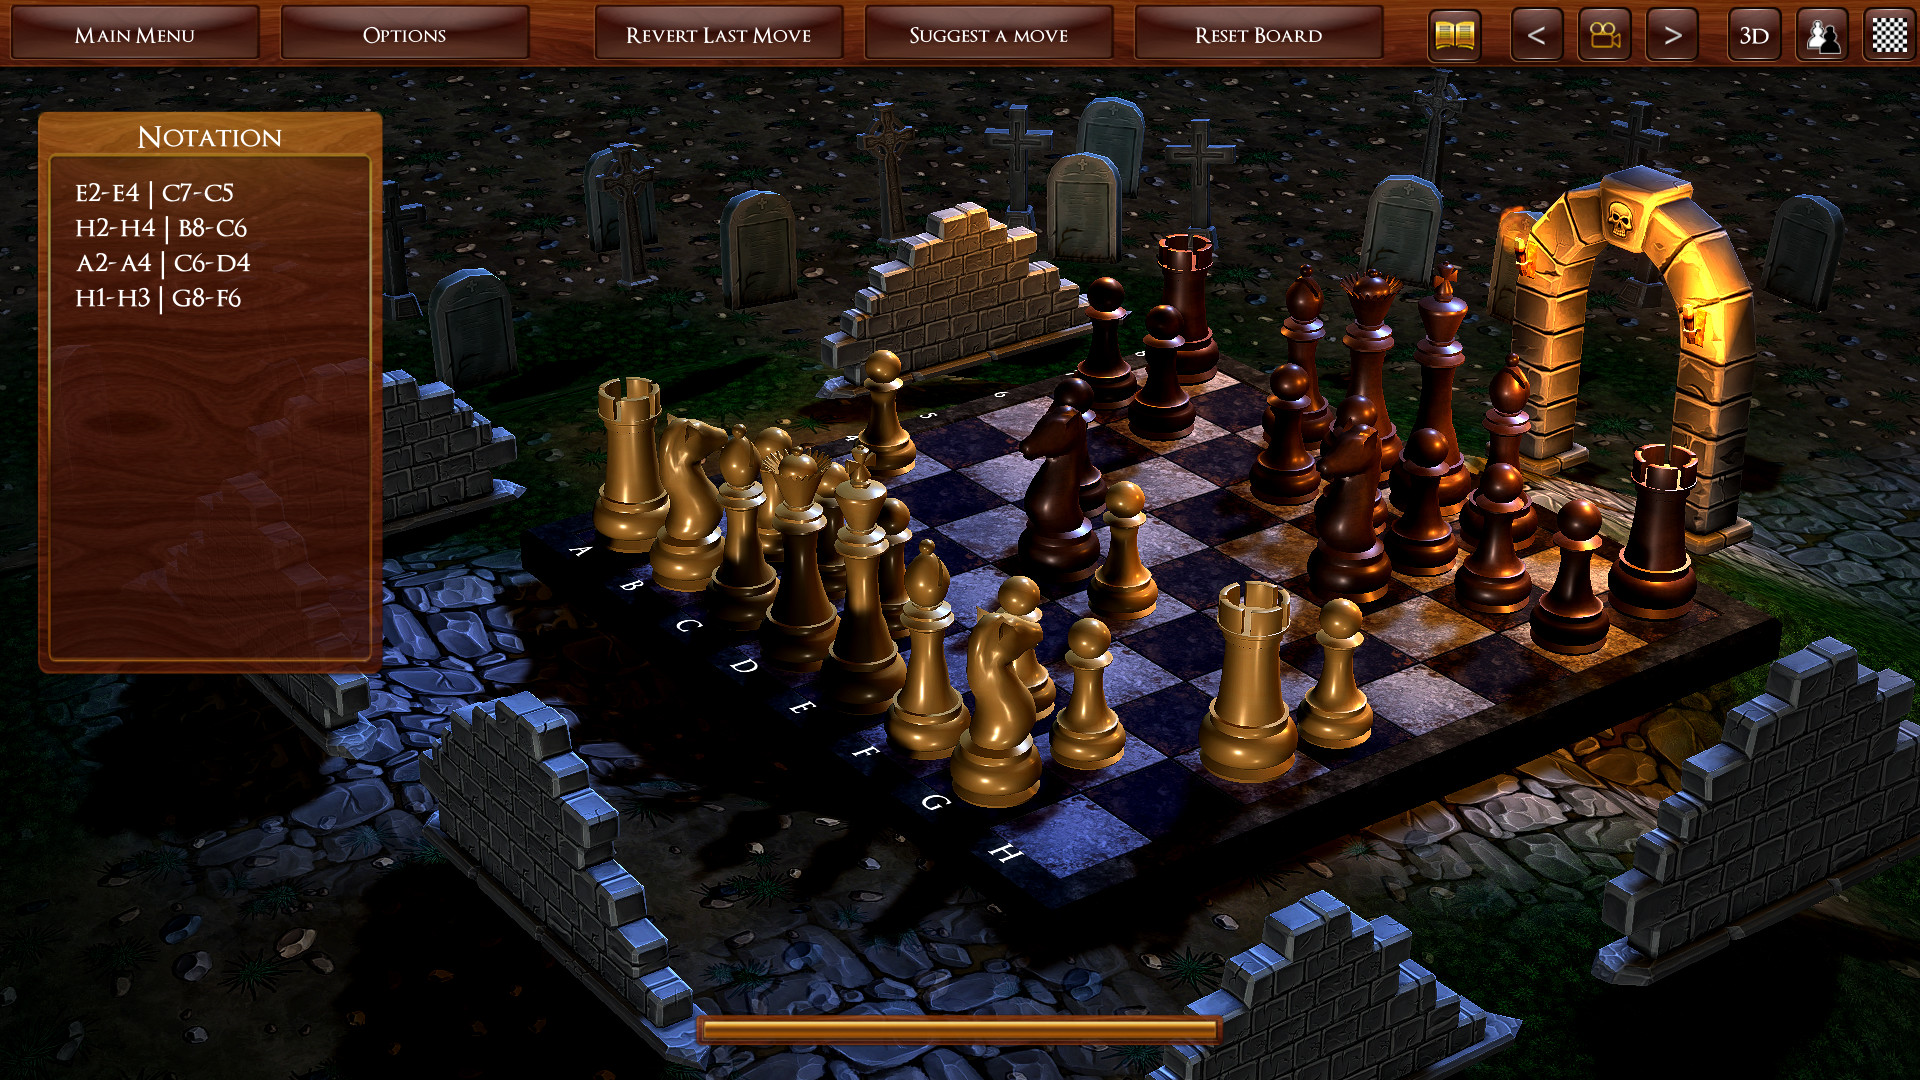 schach pc game